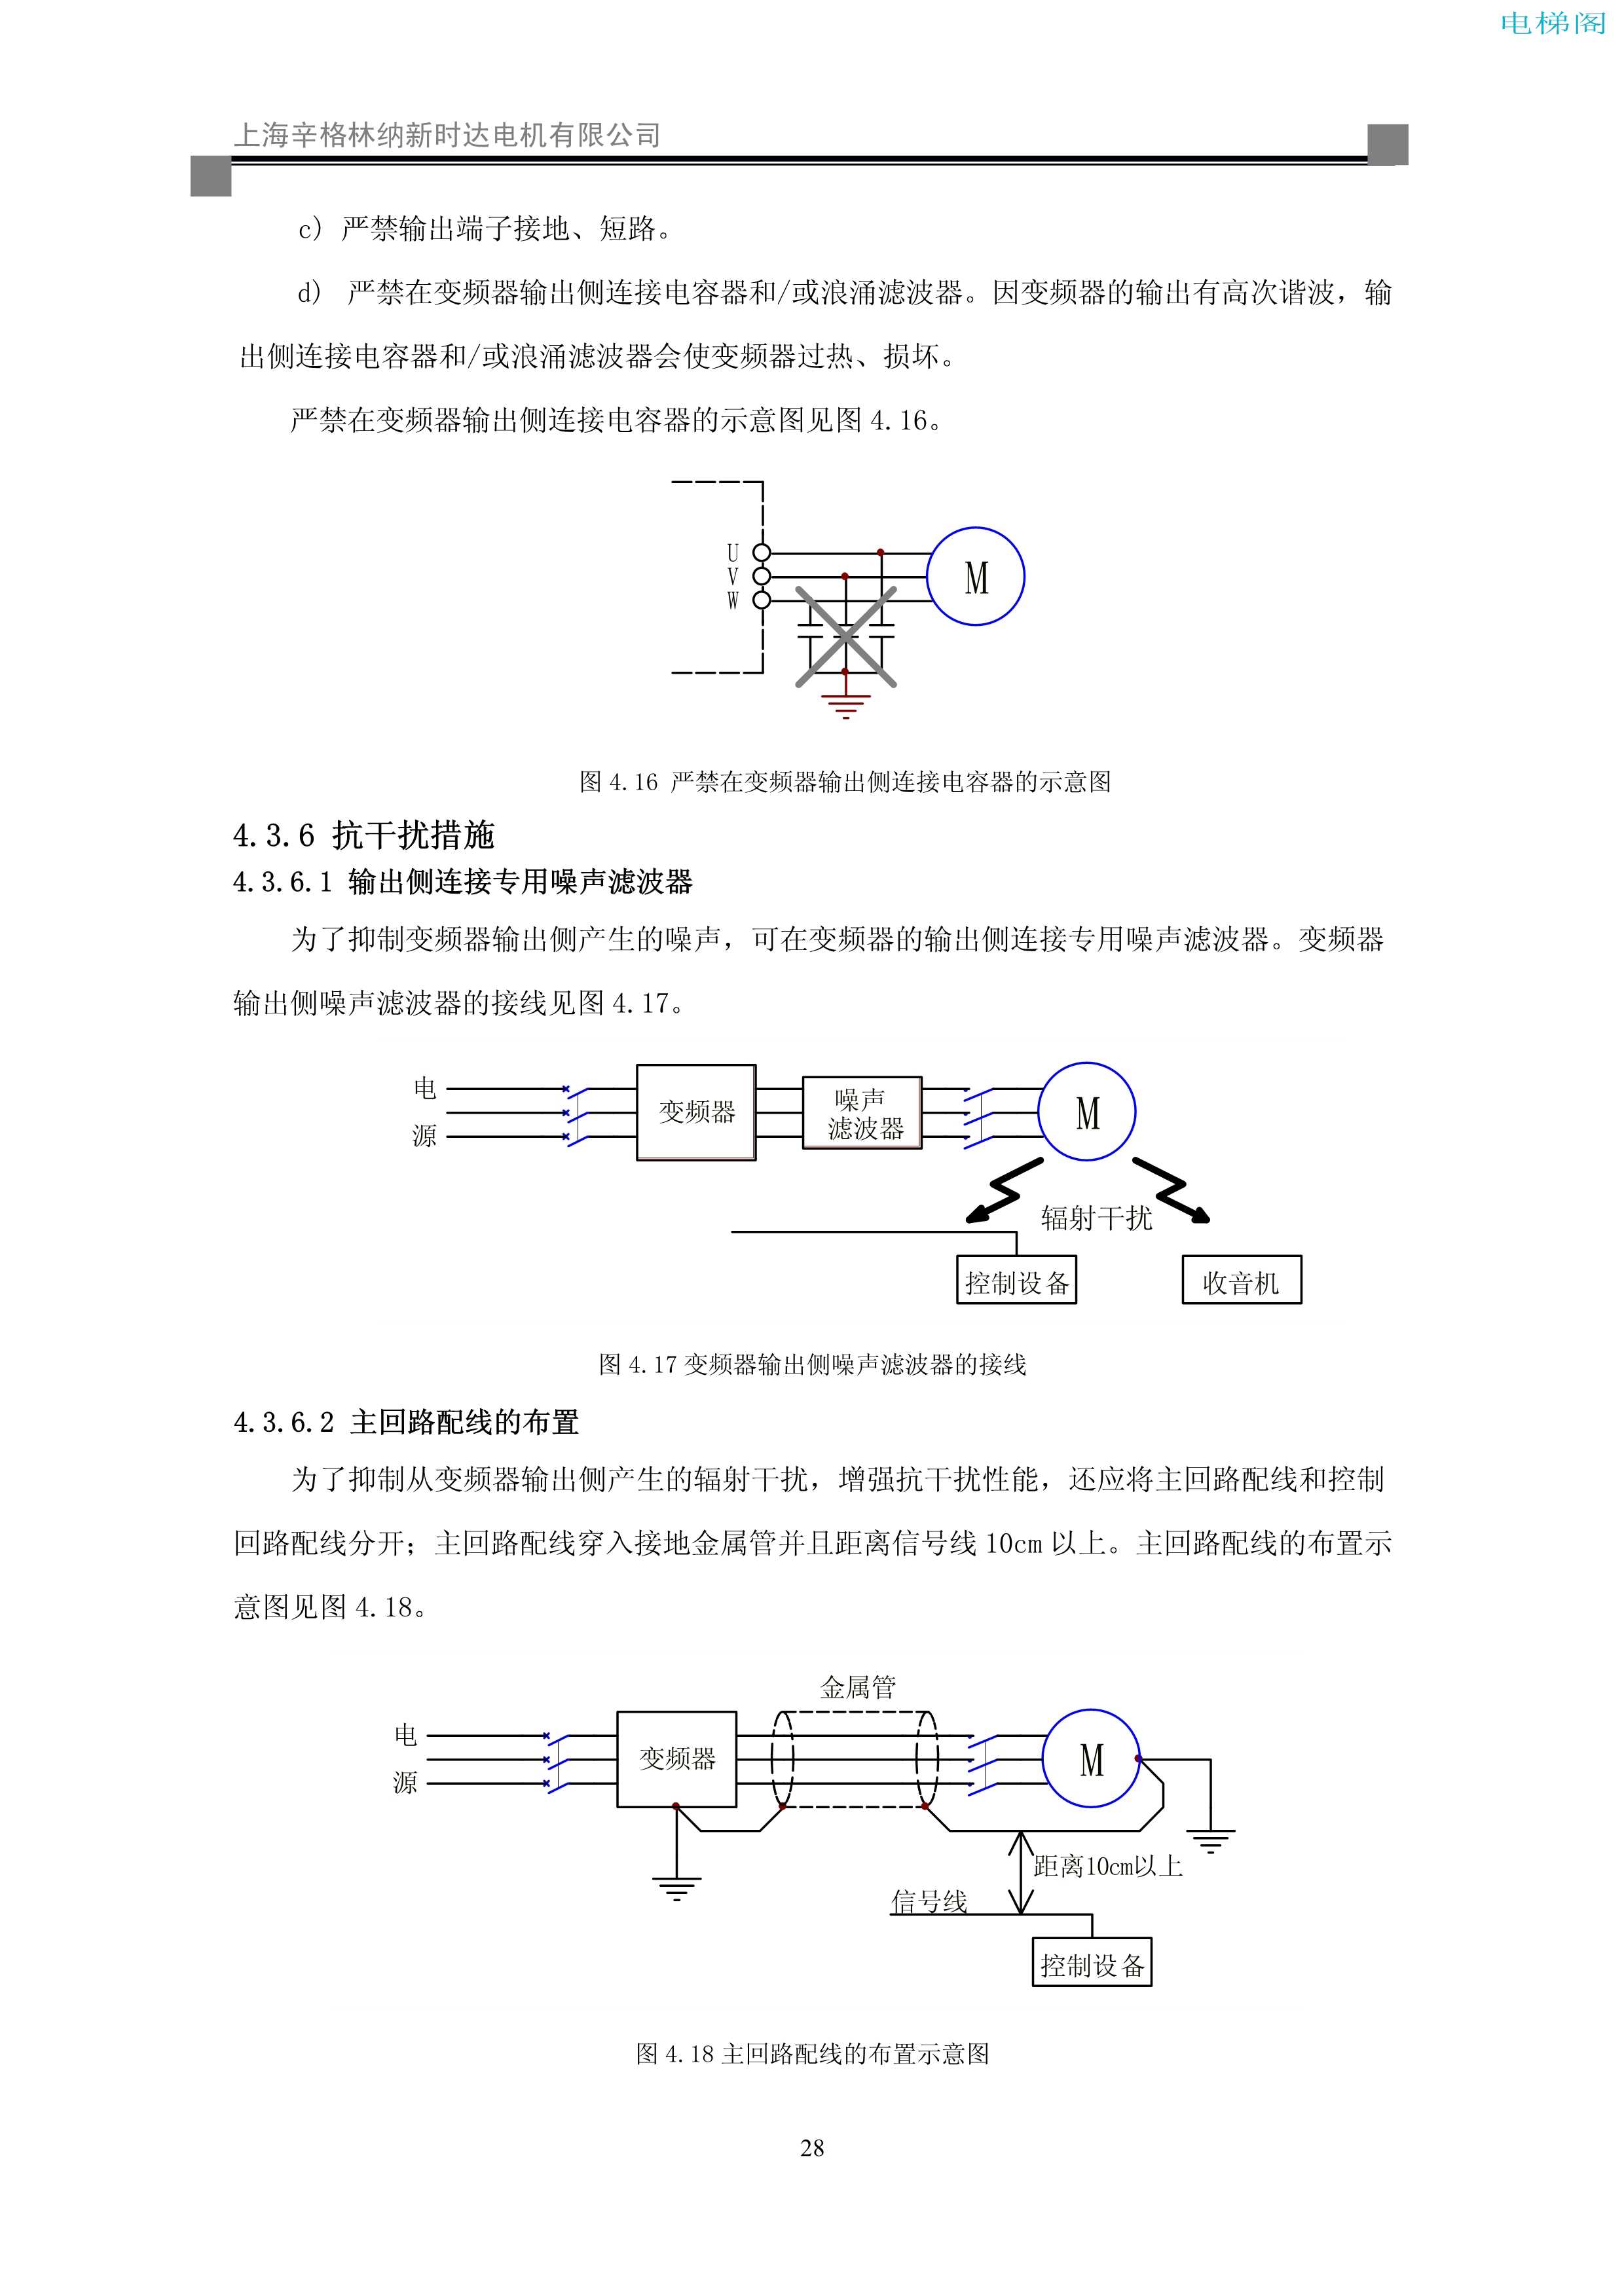 iAStar-S3系列电梯专用变频器使用说明书-9(V2[1].03)_36.jpg